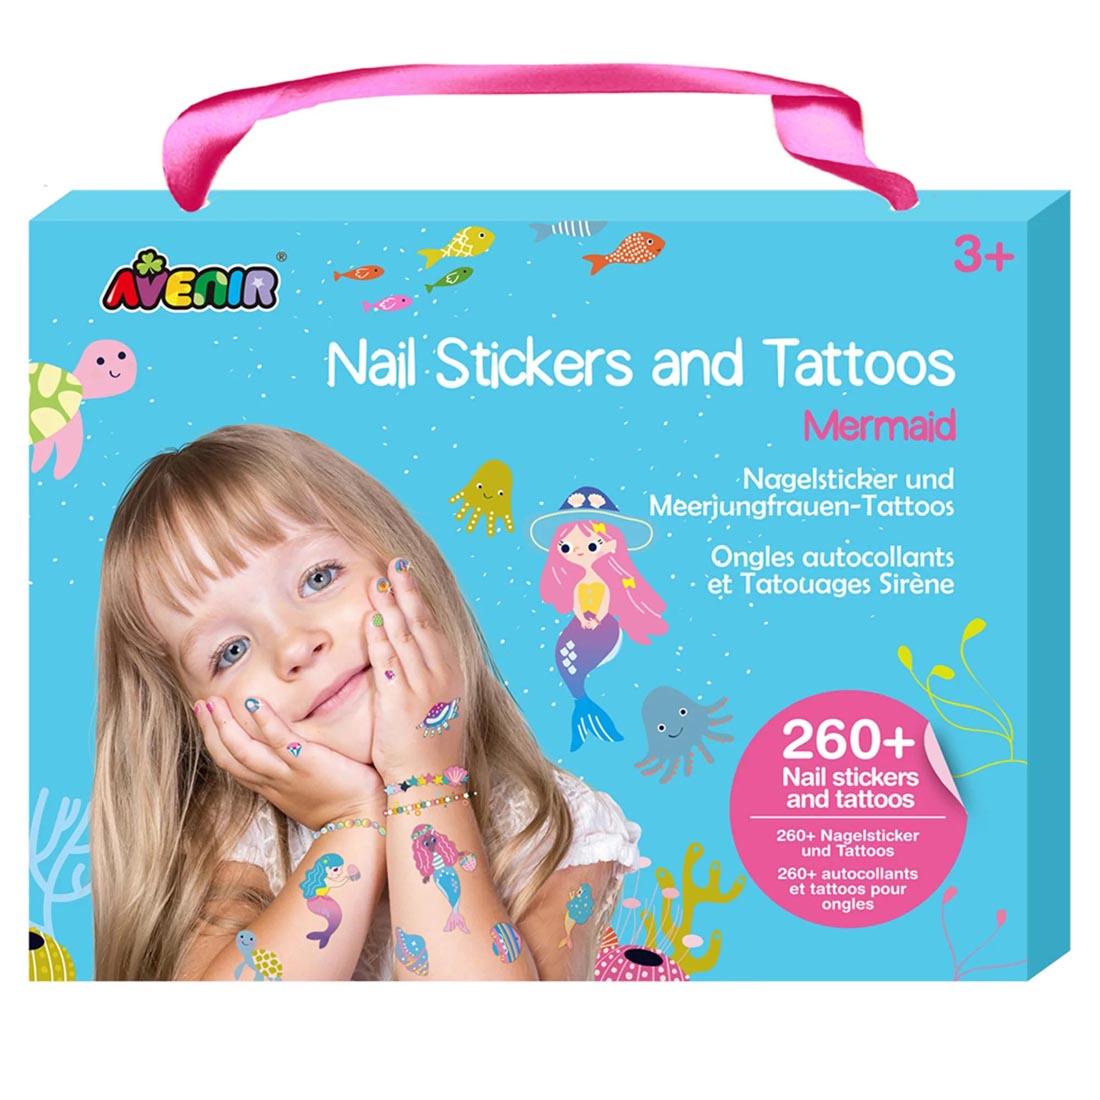 Nail Stickers & Tattoos: Mermaids by AVENIR #NA218204